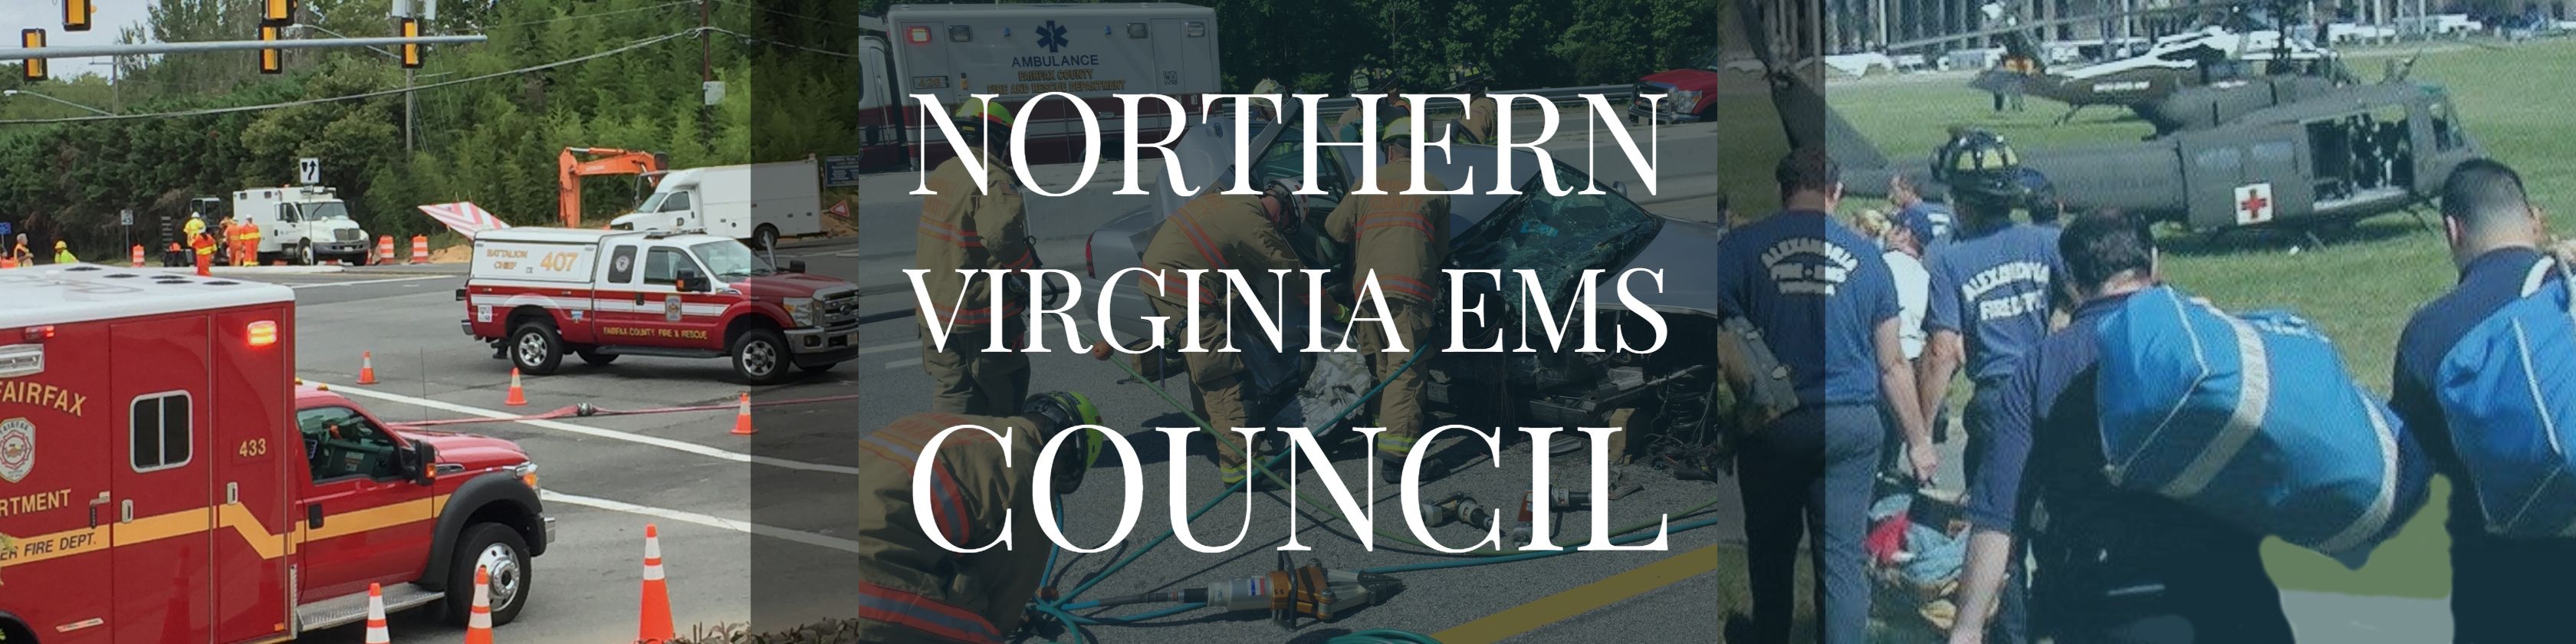 Northern Virginia EMS Council